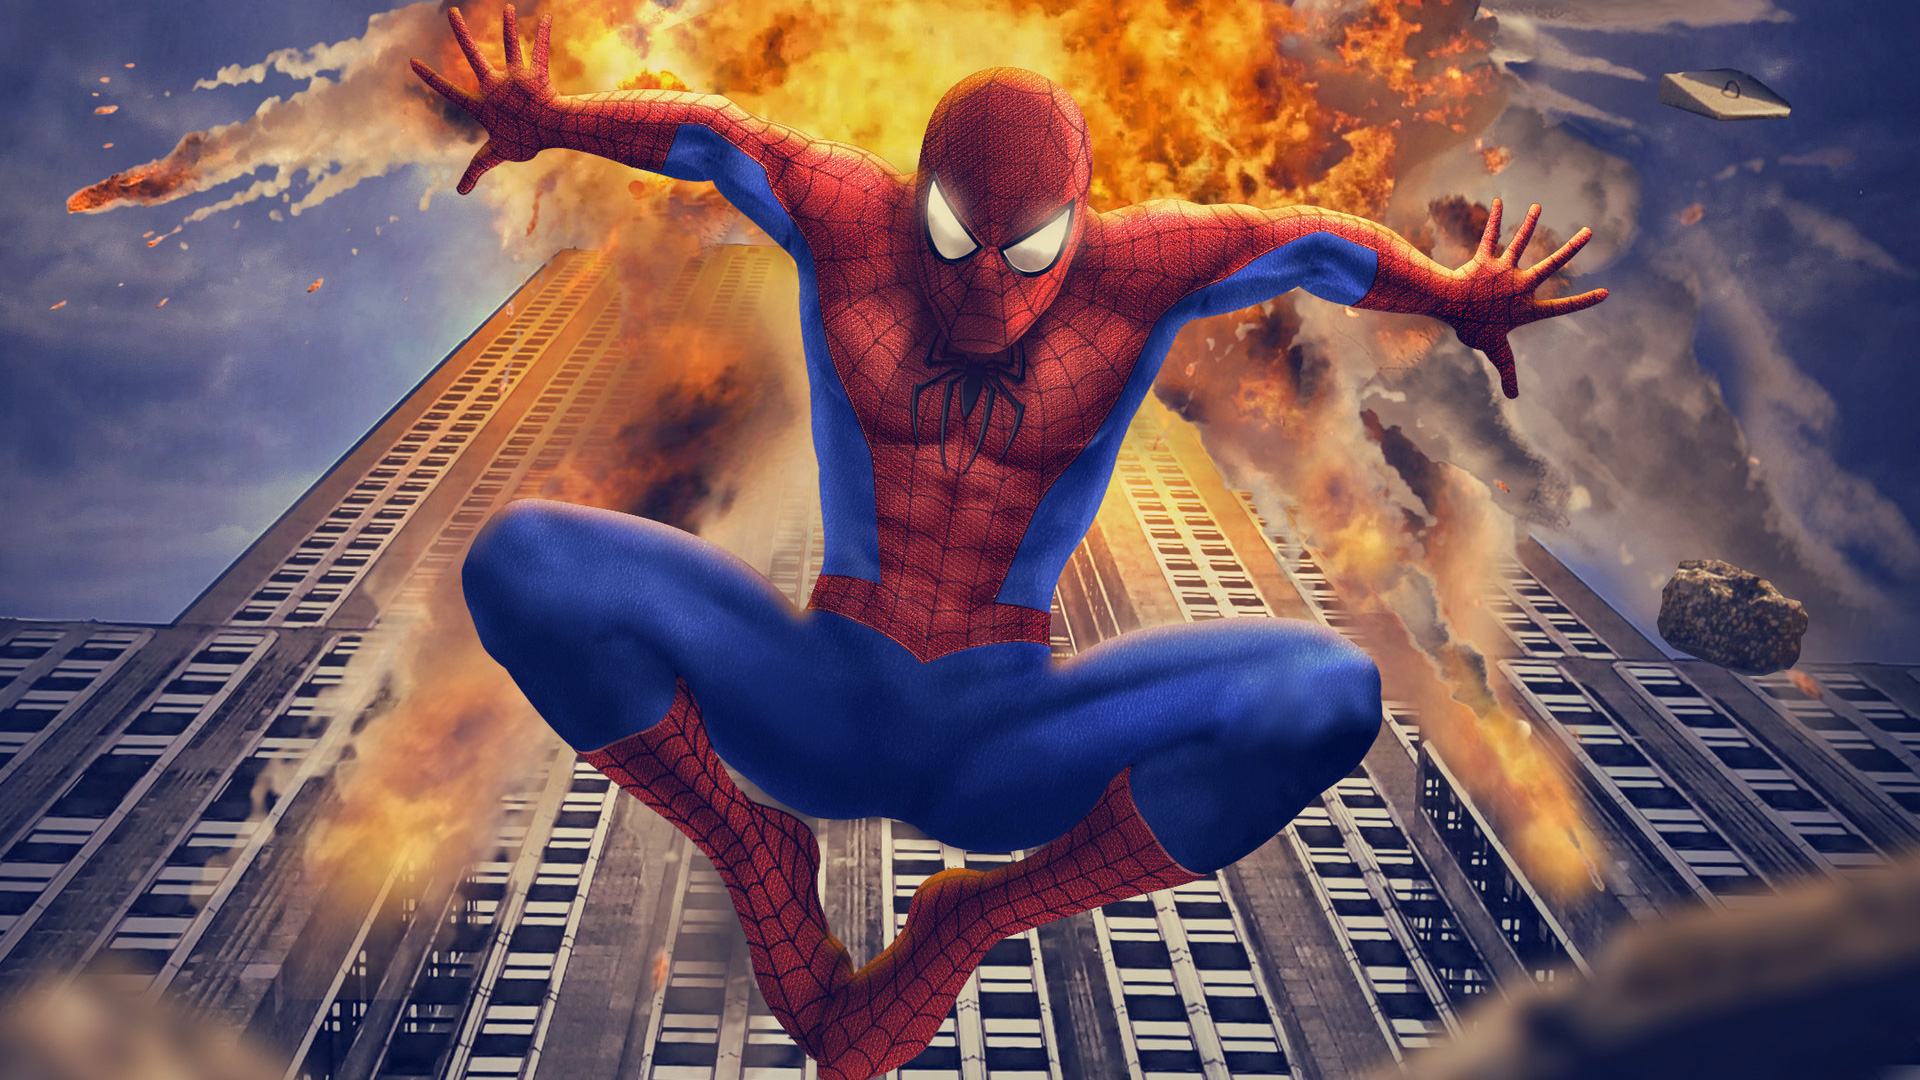 HD desktop wallpaper Spider Man Comics download free picture 448756